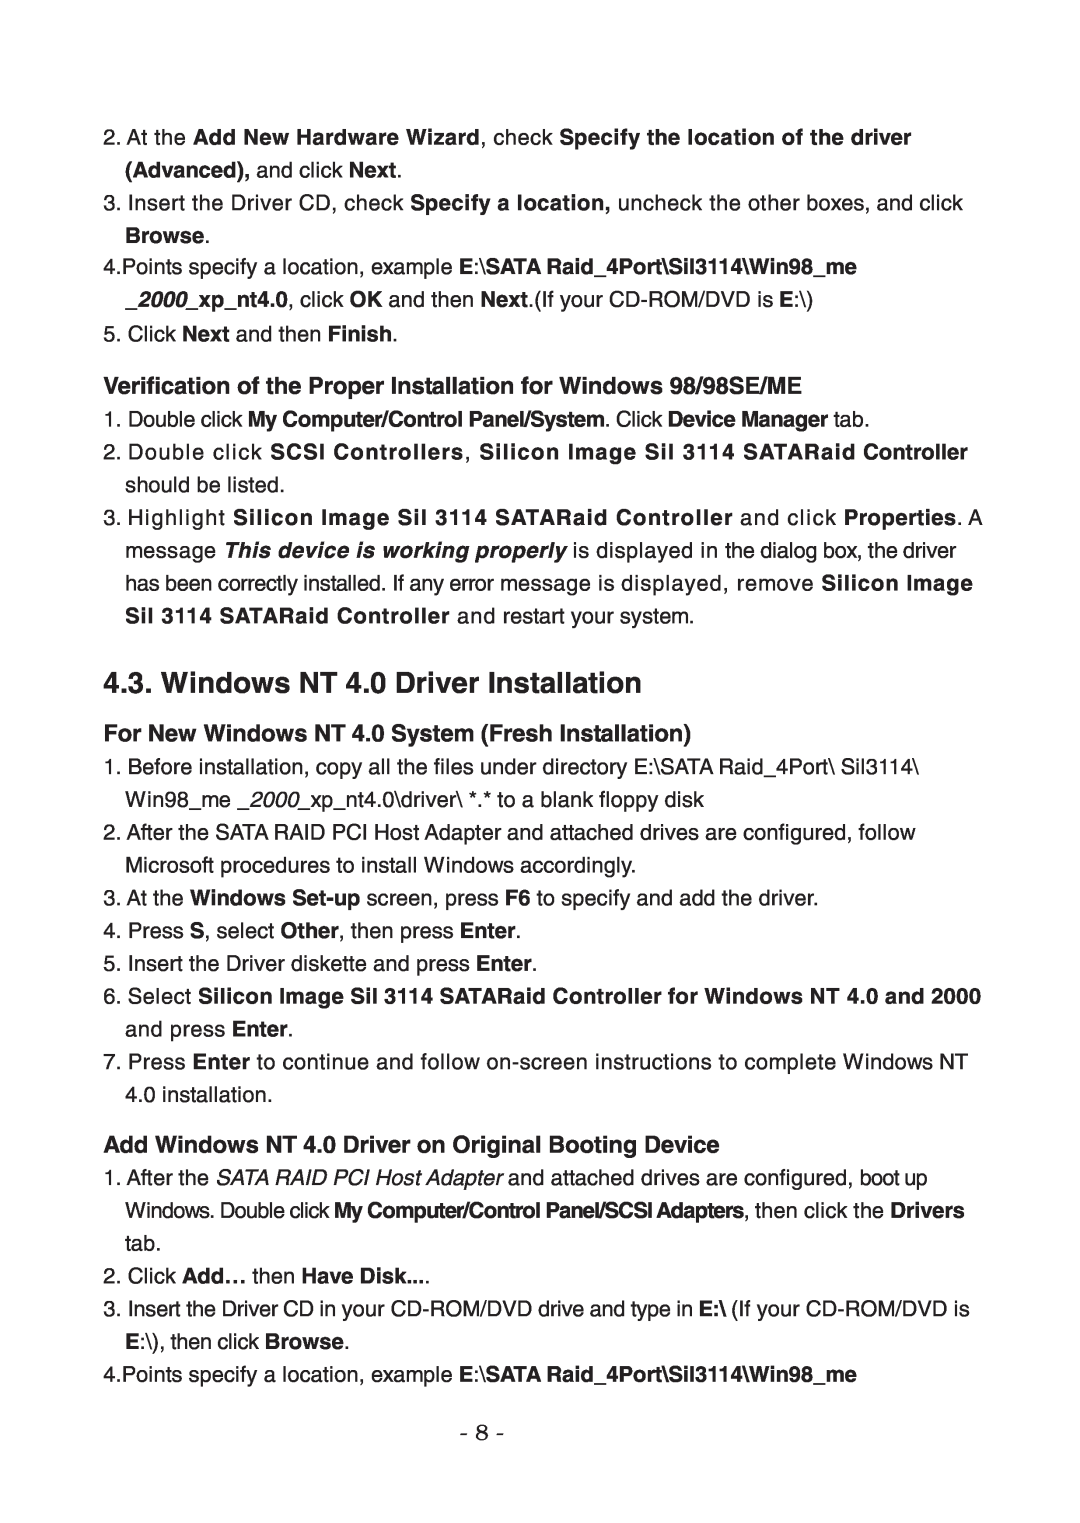 Lindy 70542 Windows NT 4.0 Driver Installation, Verification of the Proper Installation for Windows 98/98SE/ME, Browse 